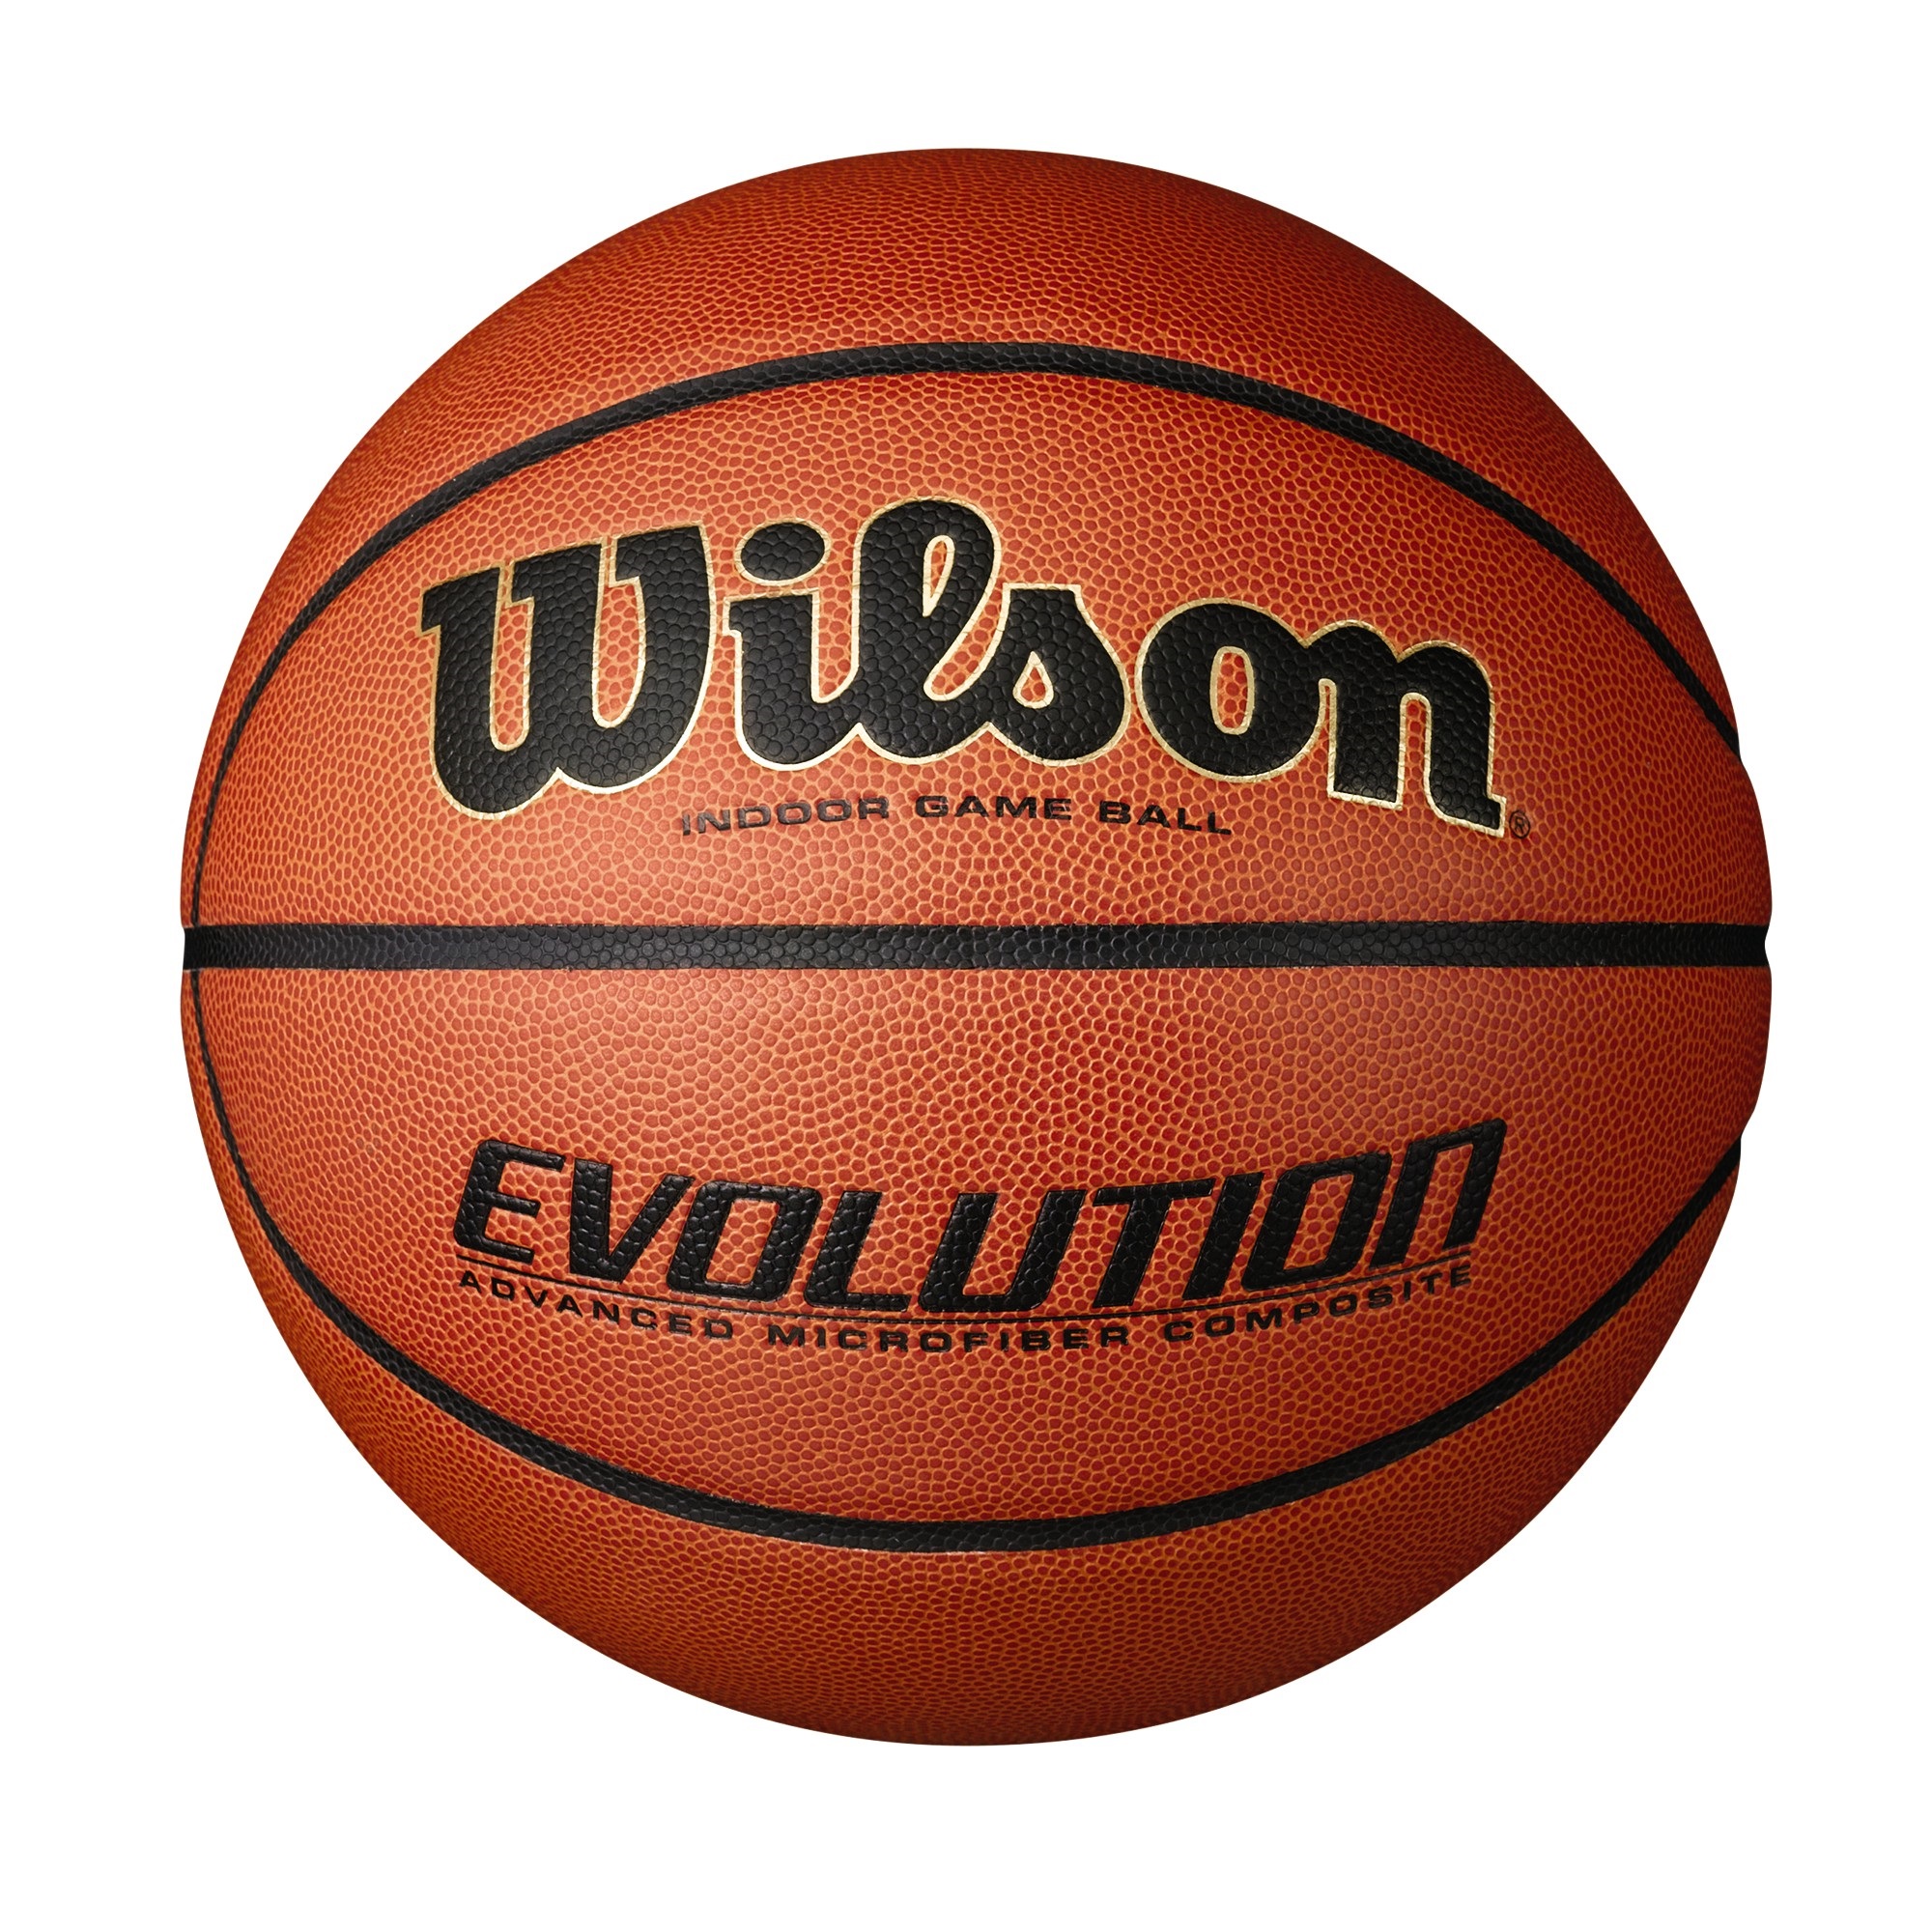 Wilson Evolution Basketball Full size - Walmart Clearance YMMV $25